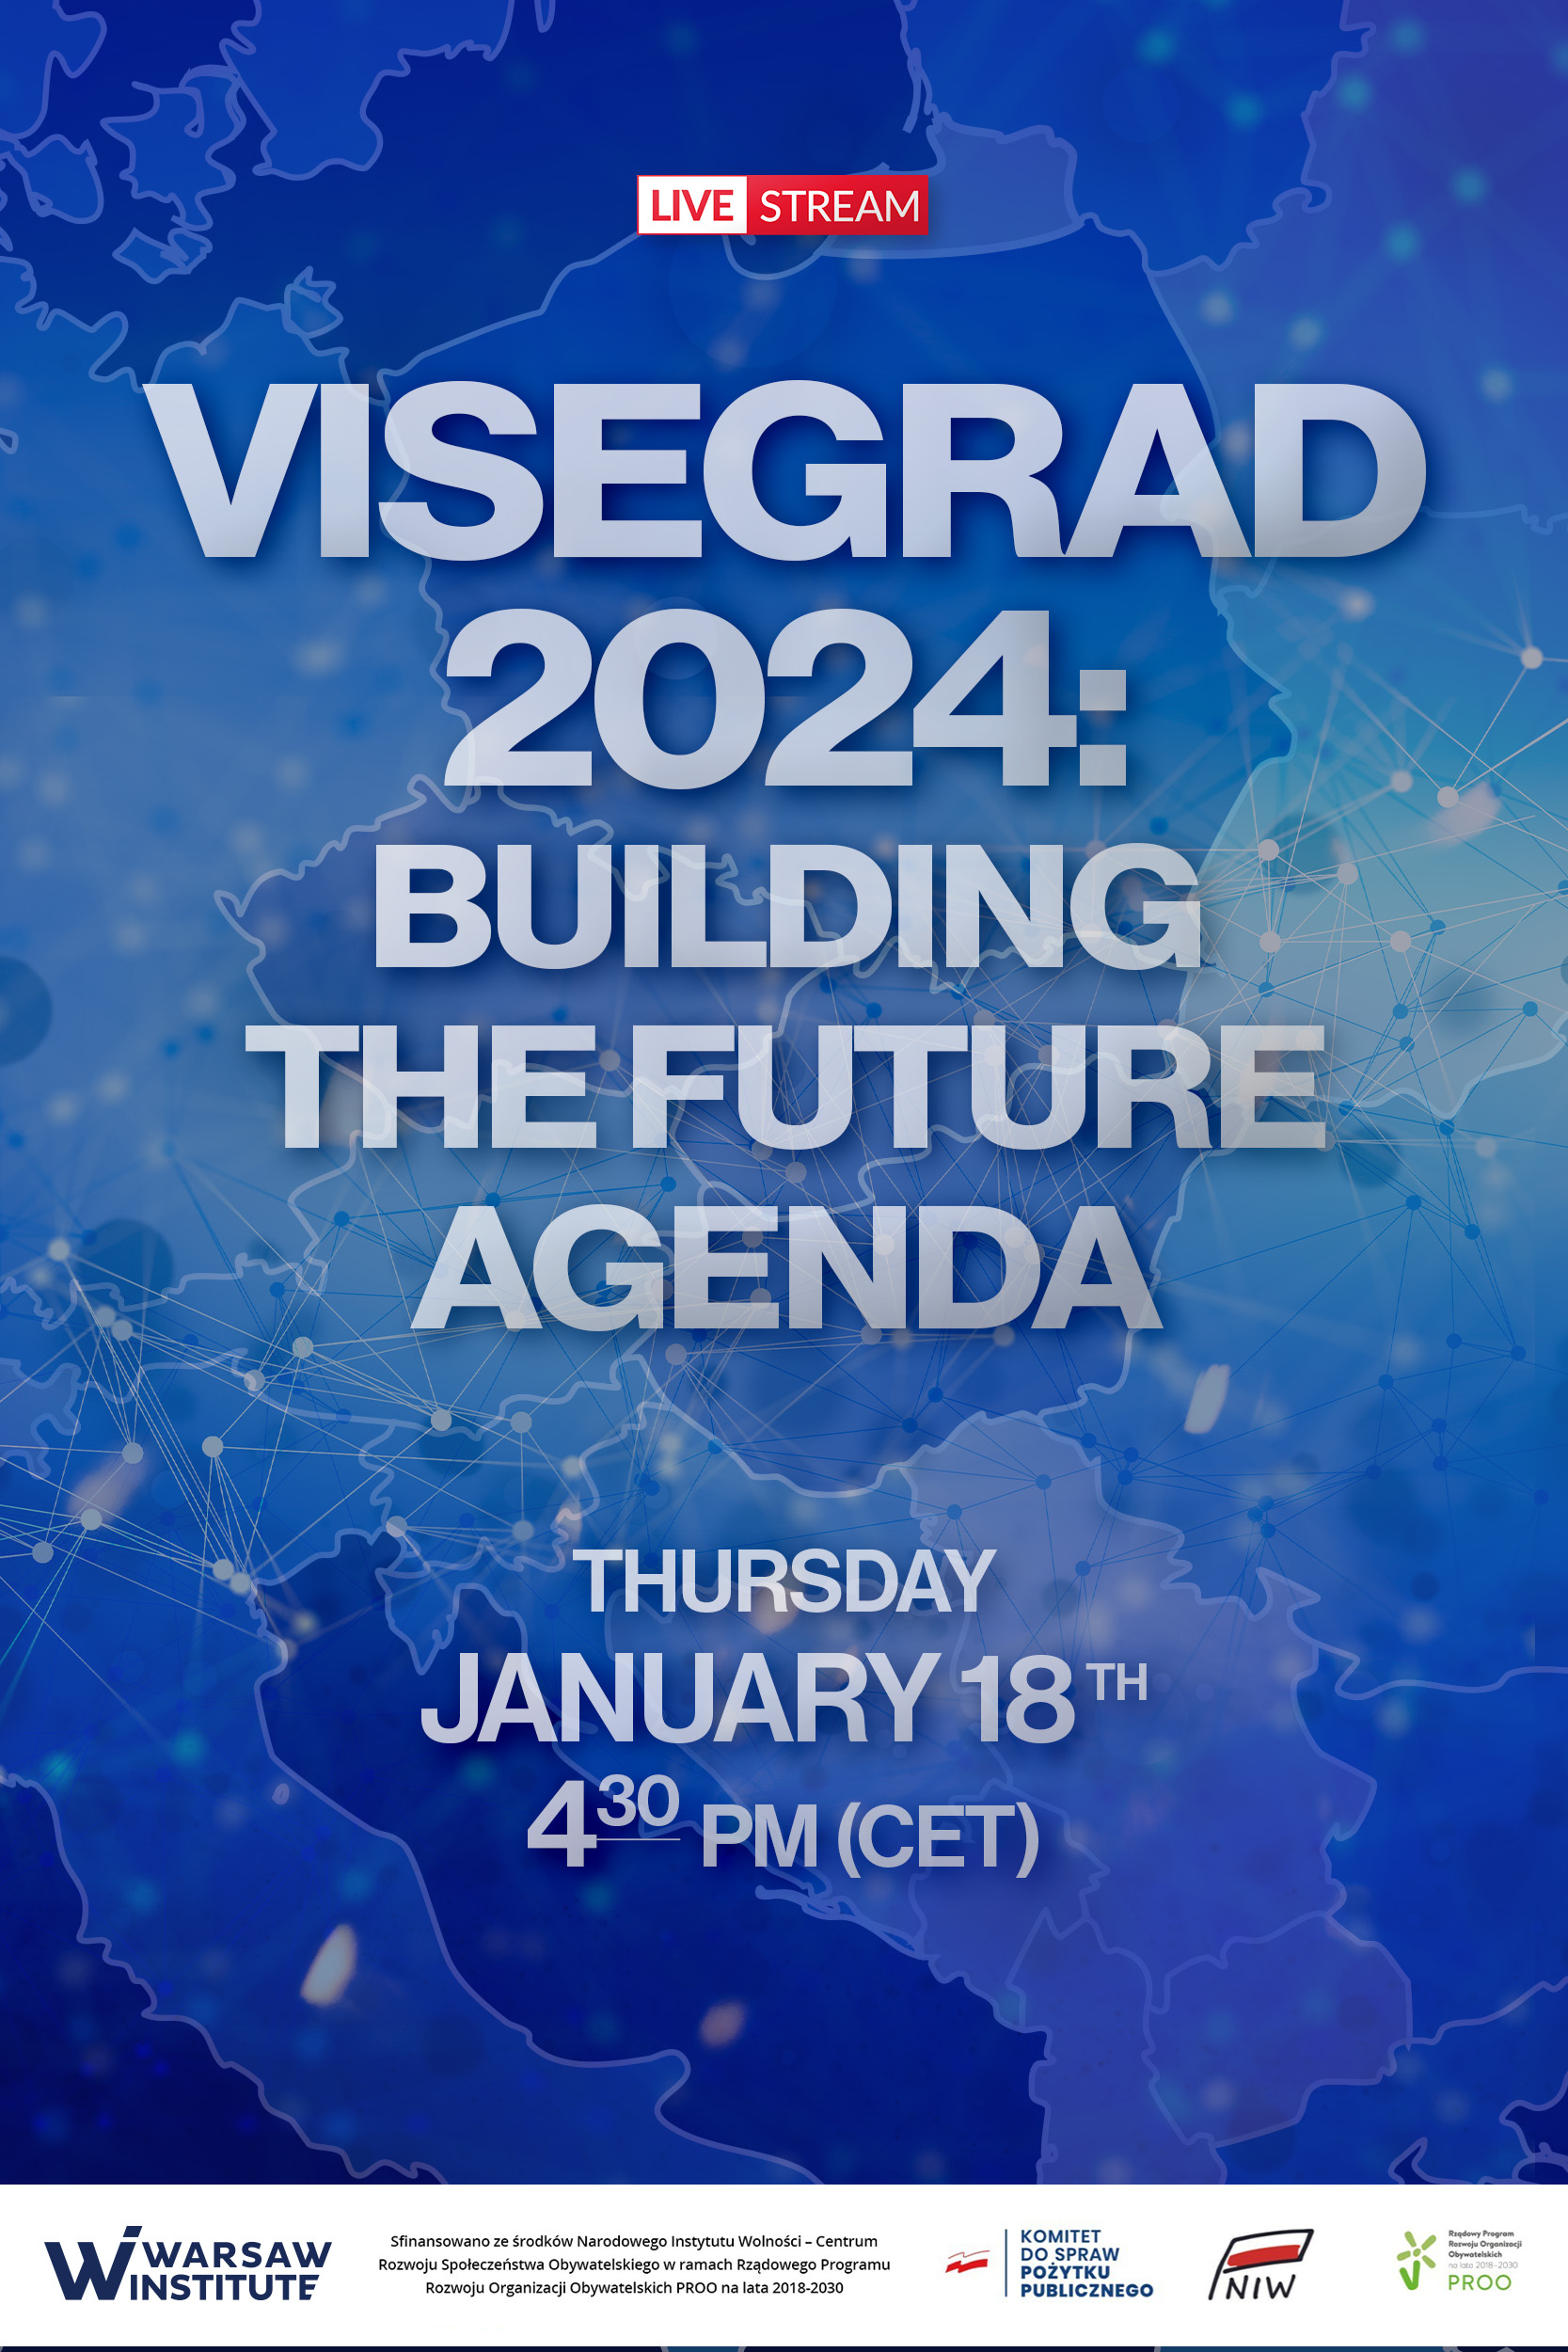 Visegrad 2024 Building the Future Agenda Warsaw Institute